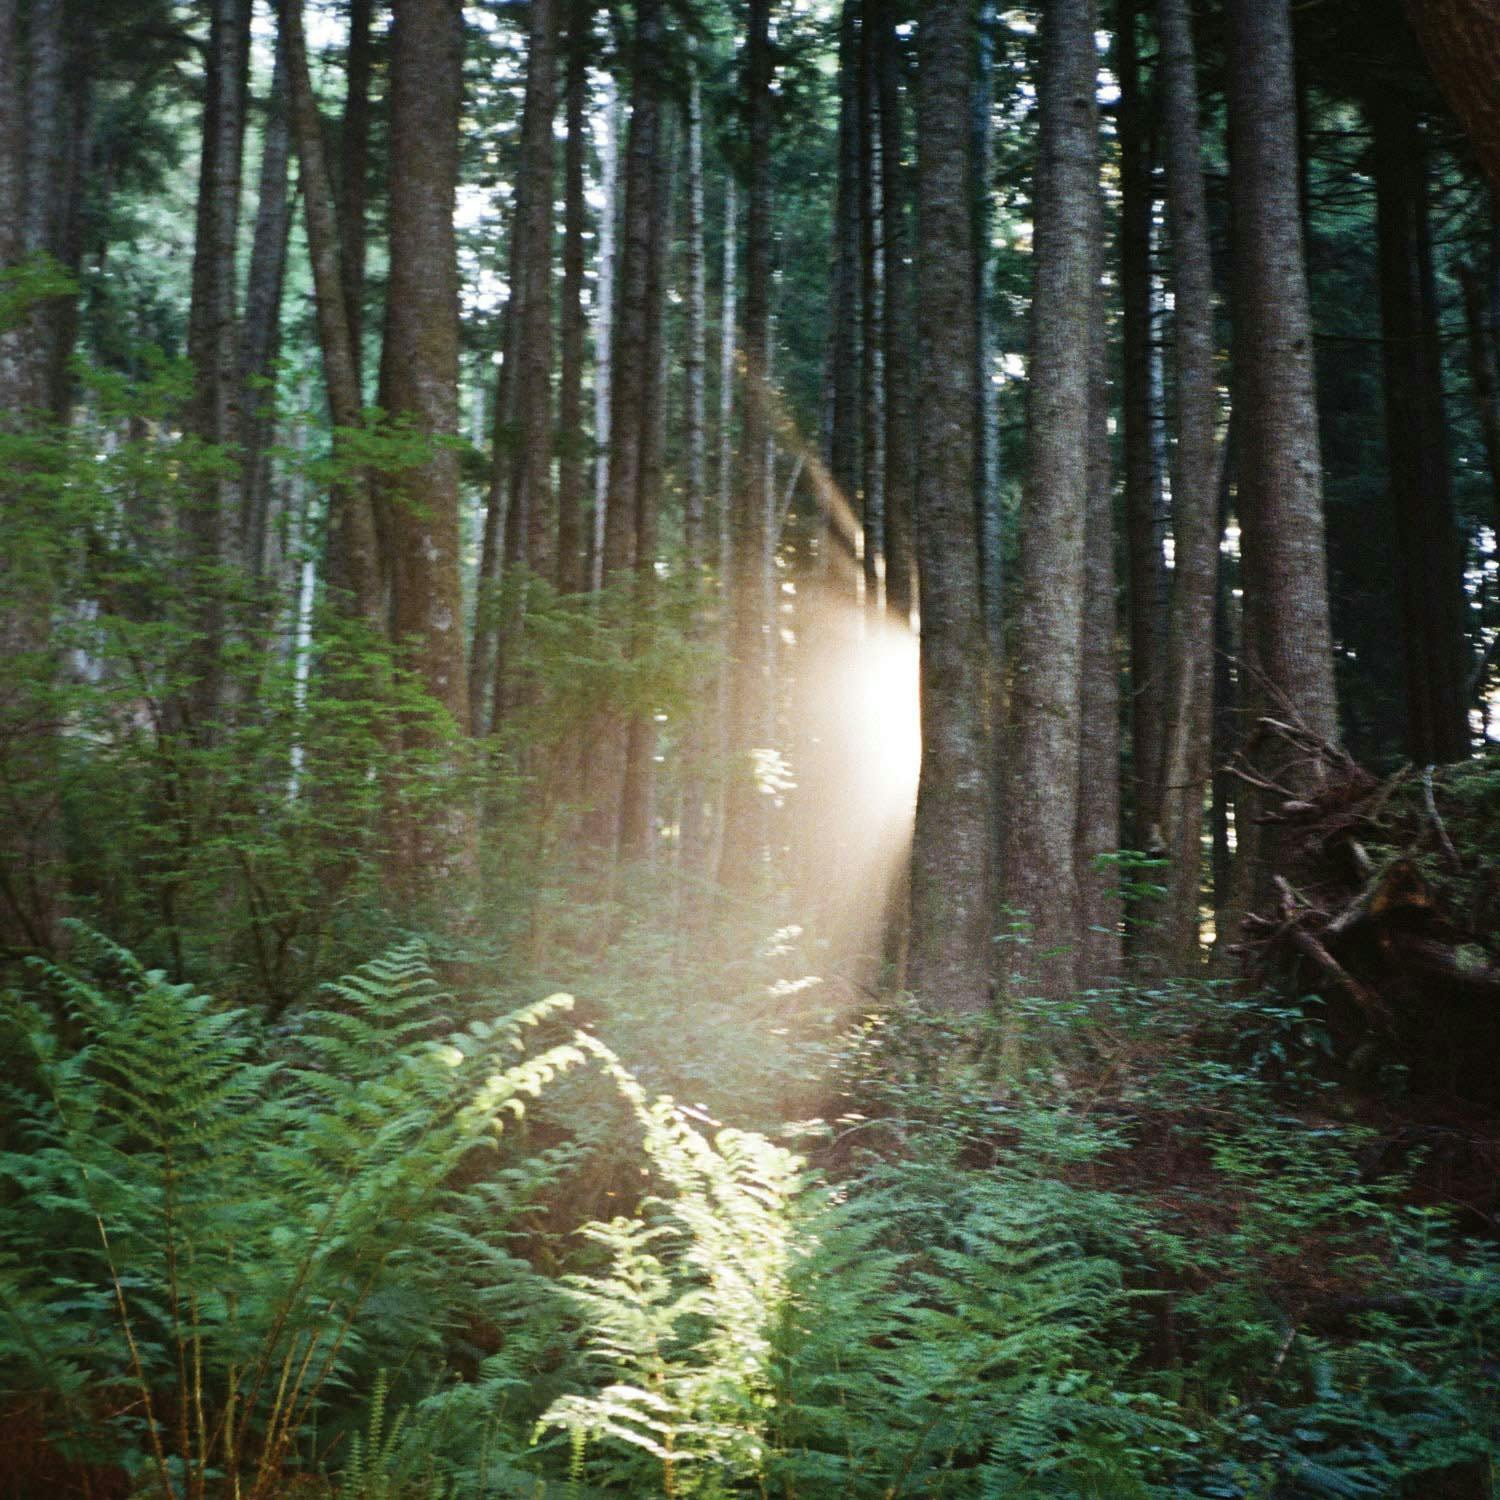 A burst of bright sunlight shines out between conifer trunks in a west coast rainforest, illuminating some bright green bracken ferns